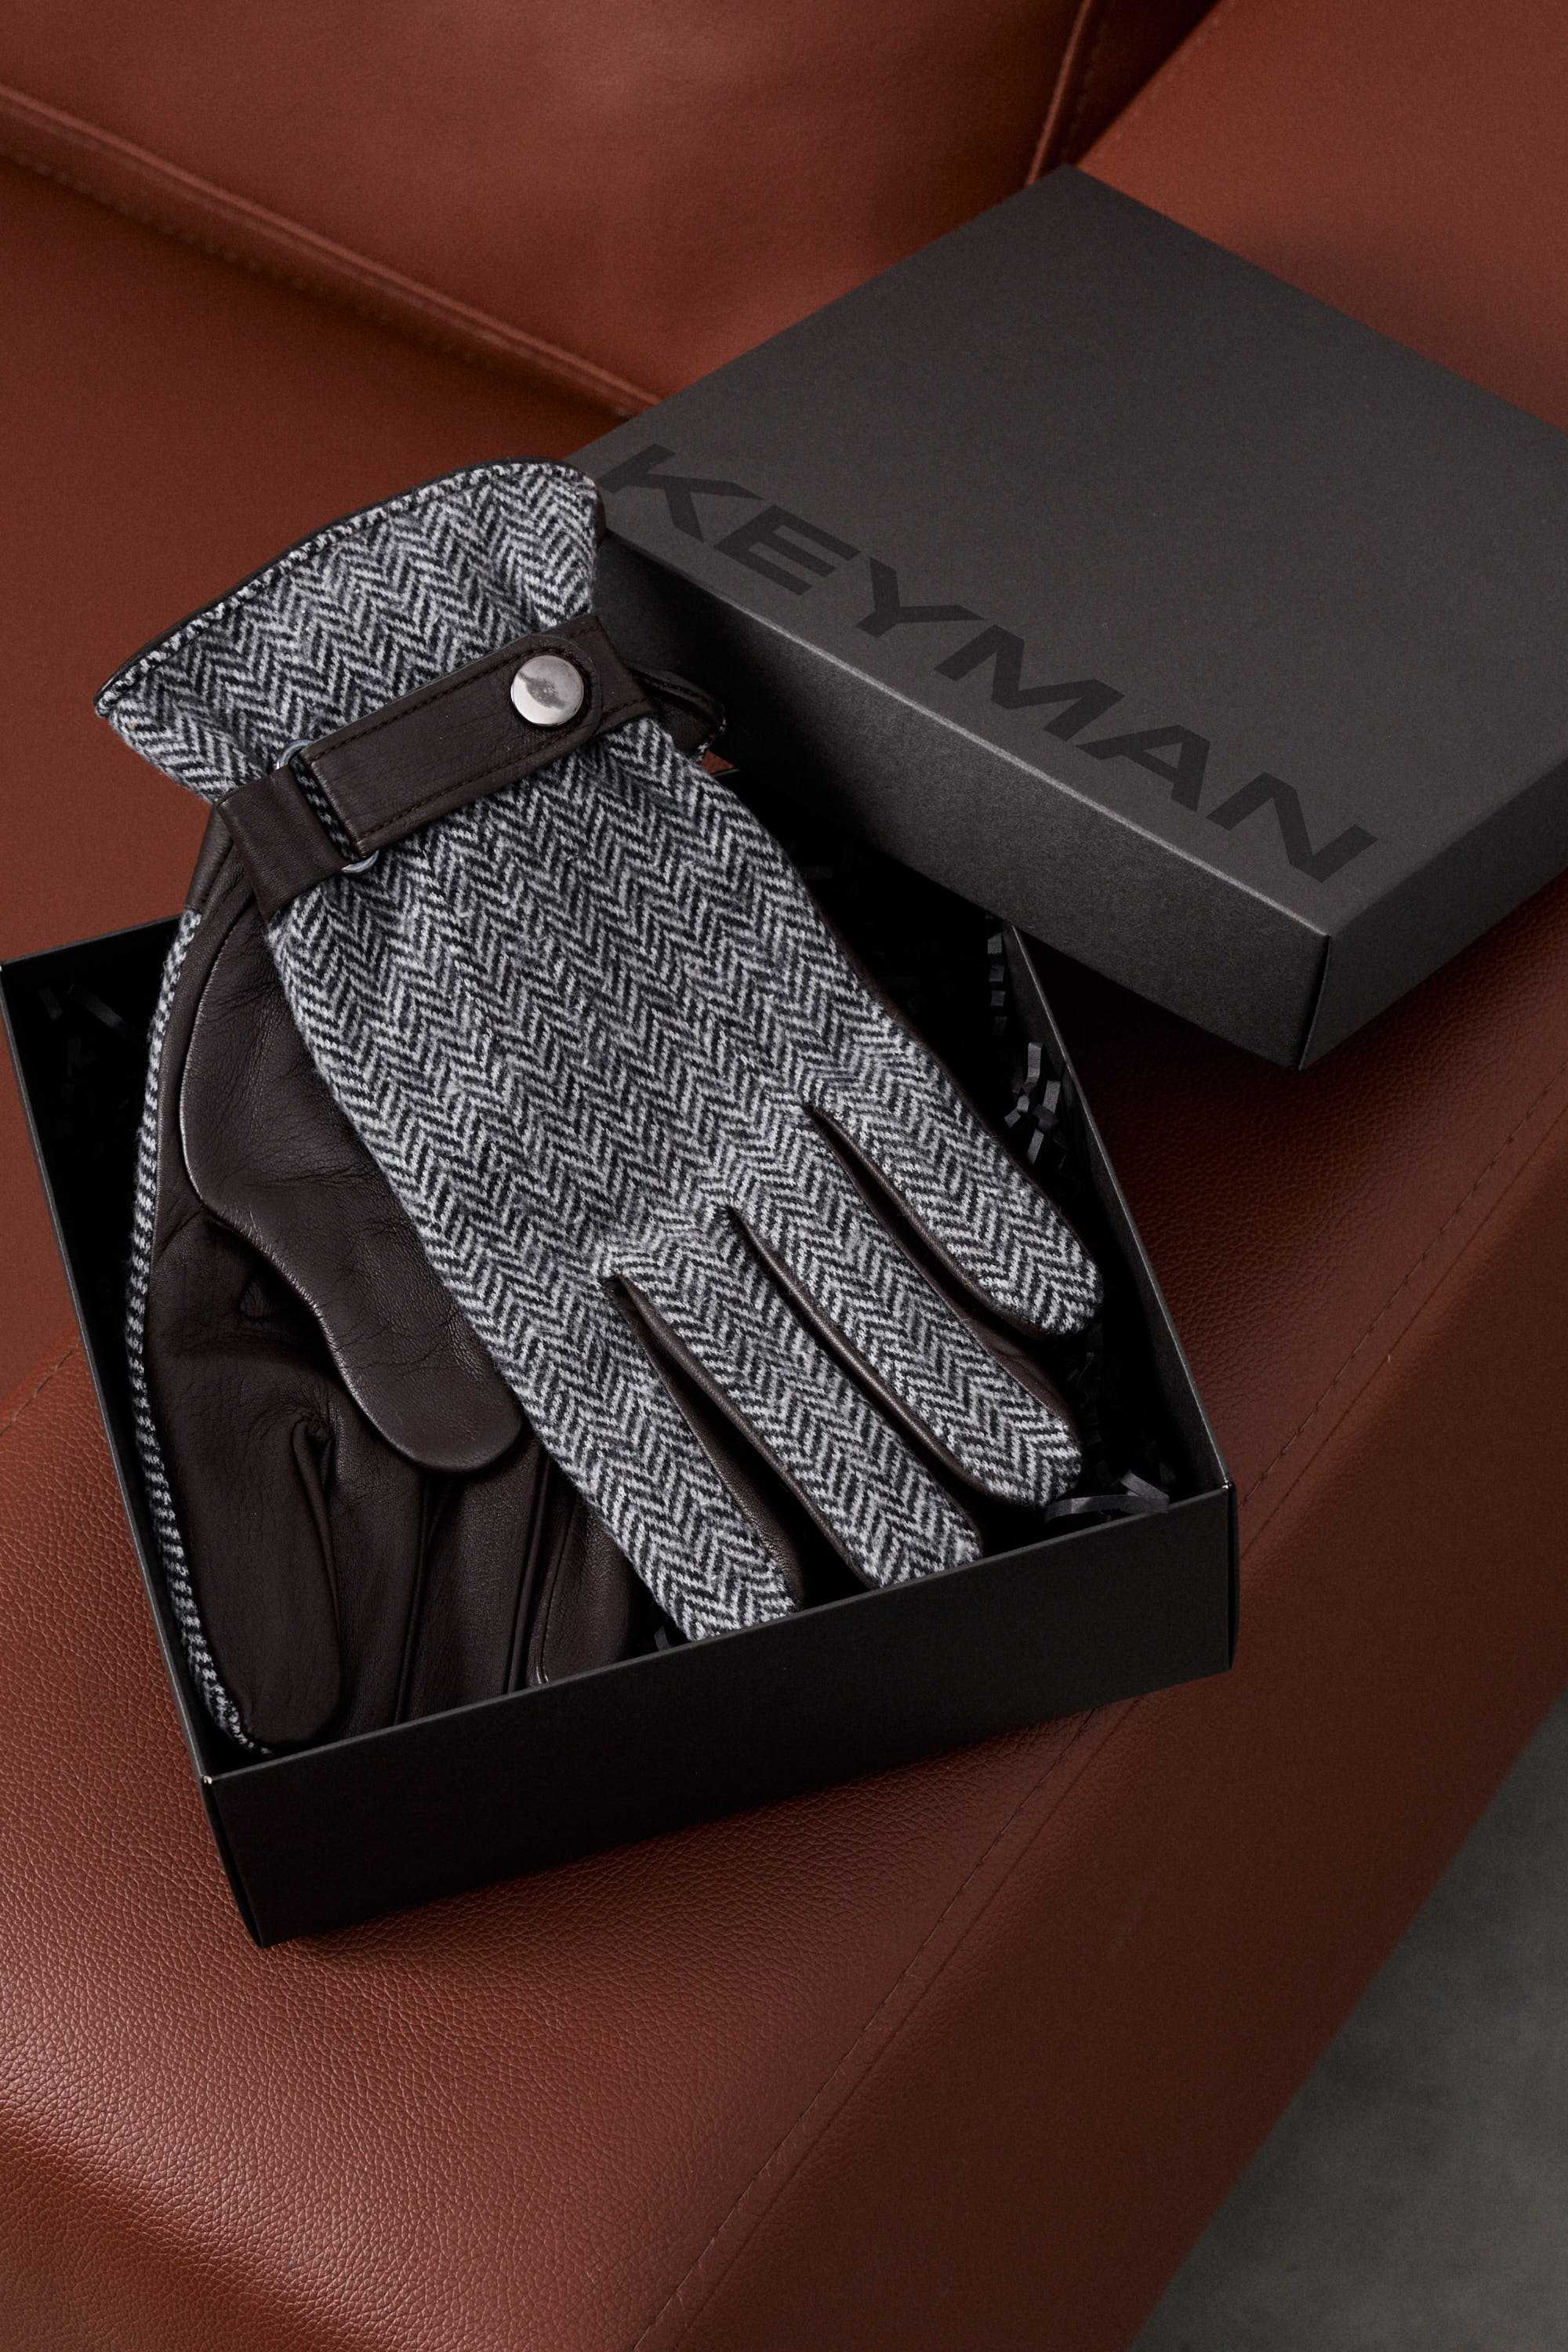 Пример подарочного набора Keyman (фирменная коробочка и перчатки)